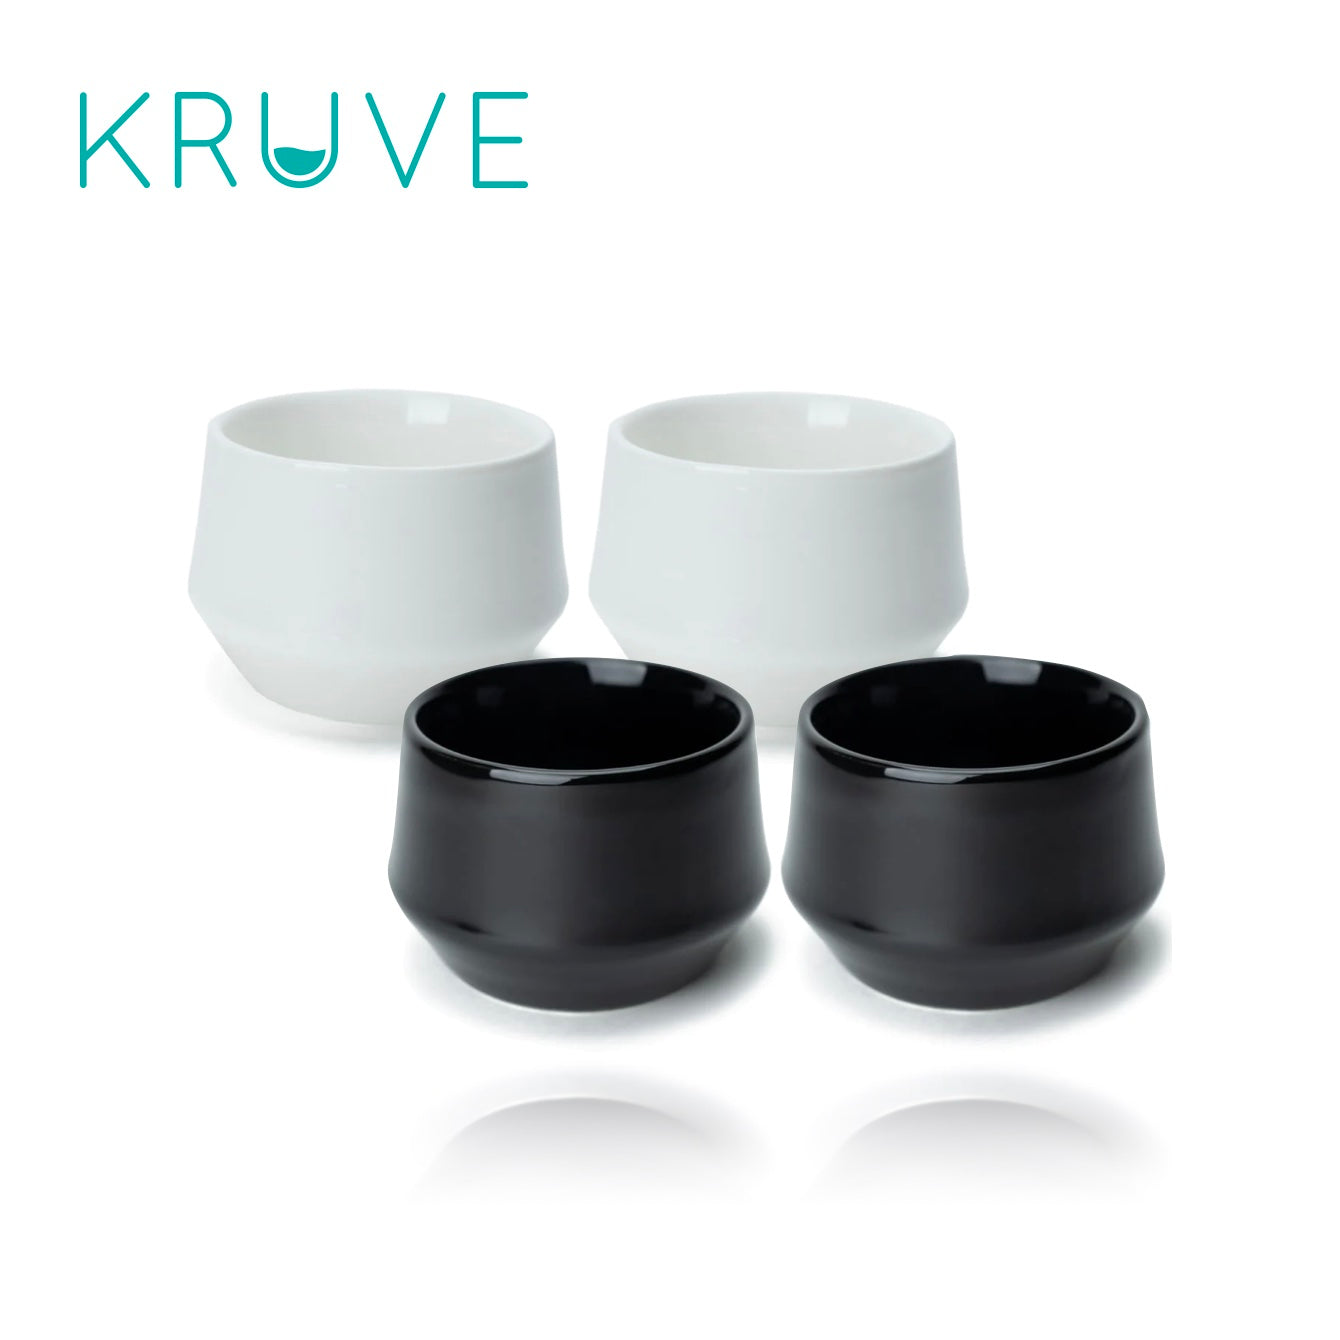 KRUVE Imagine Porcelain Latte Cups